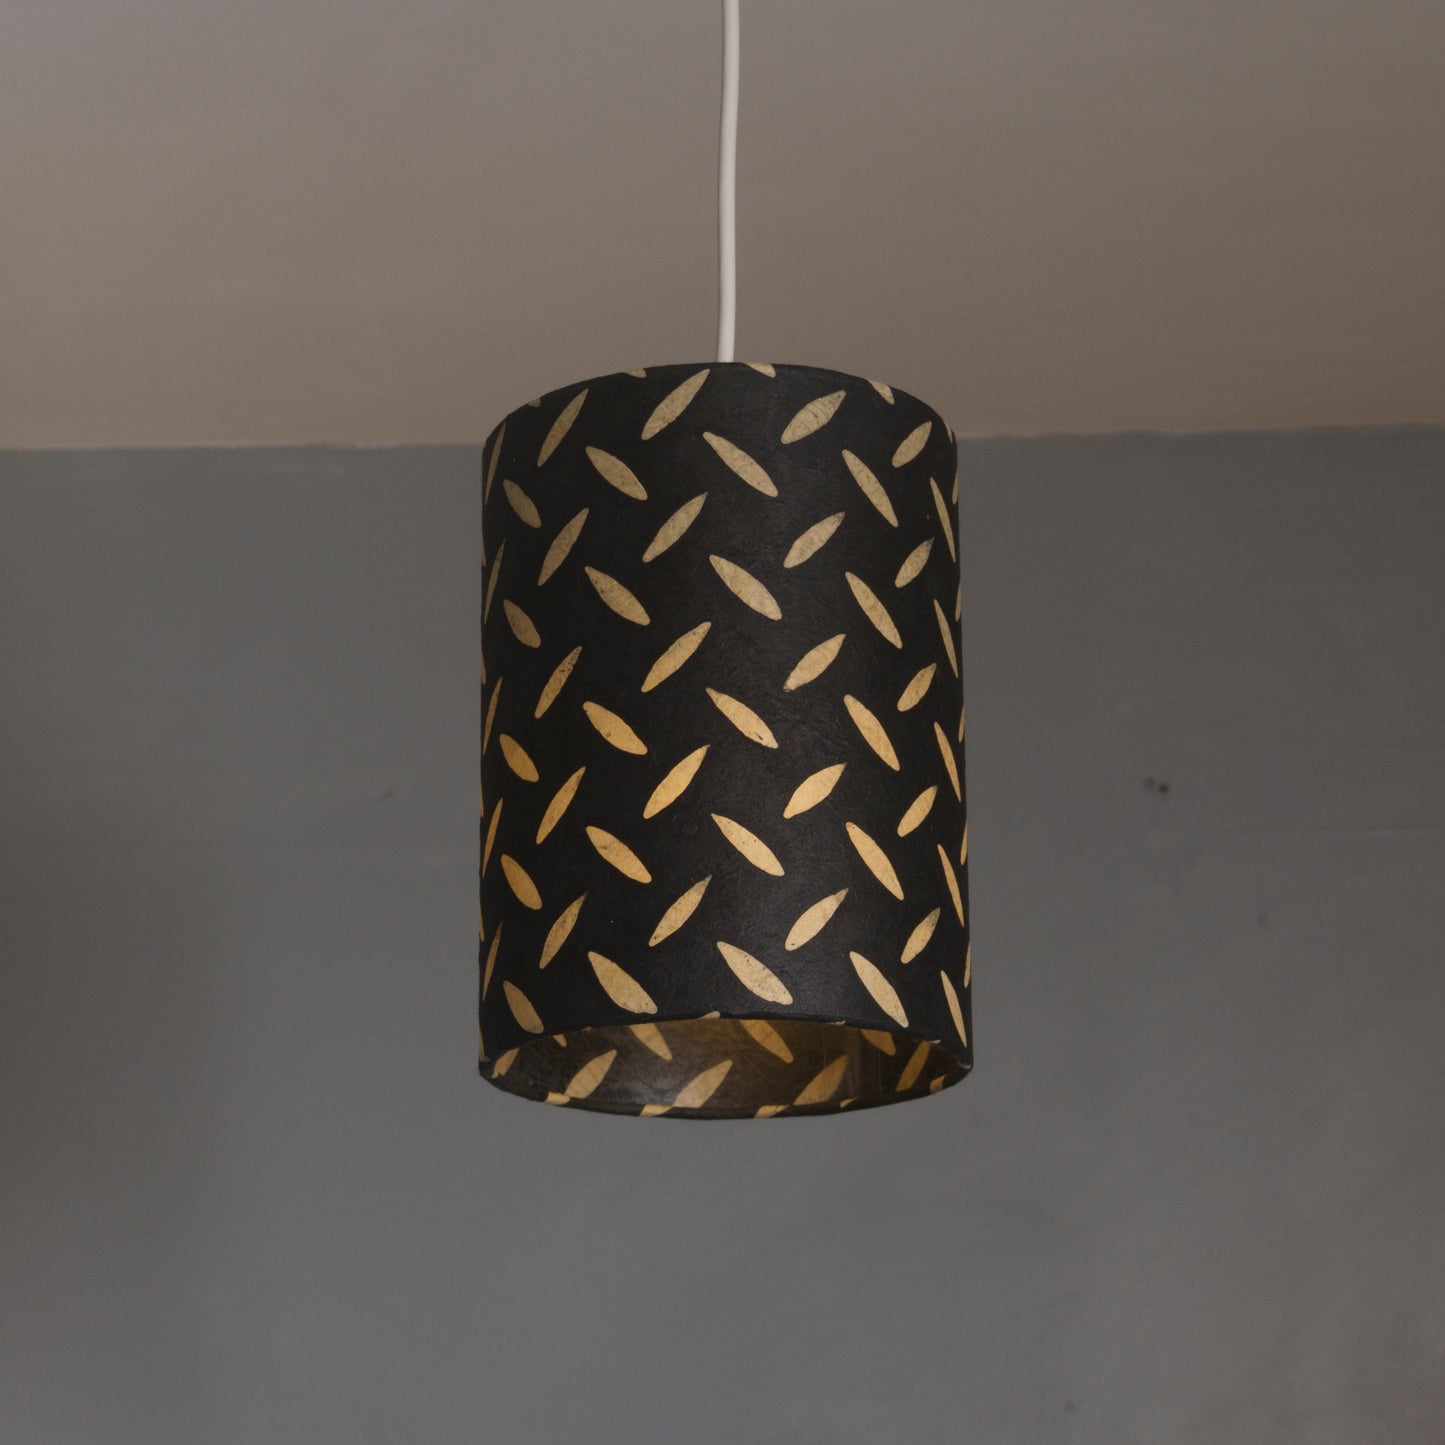 3 Tier Lamp Shade - P11 - Batik Tread Plate Black, 50cm x 20cm, 40cm x 17.5cm & 30cm x 15cm